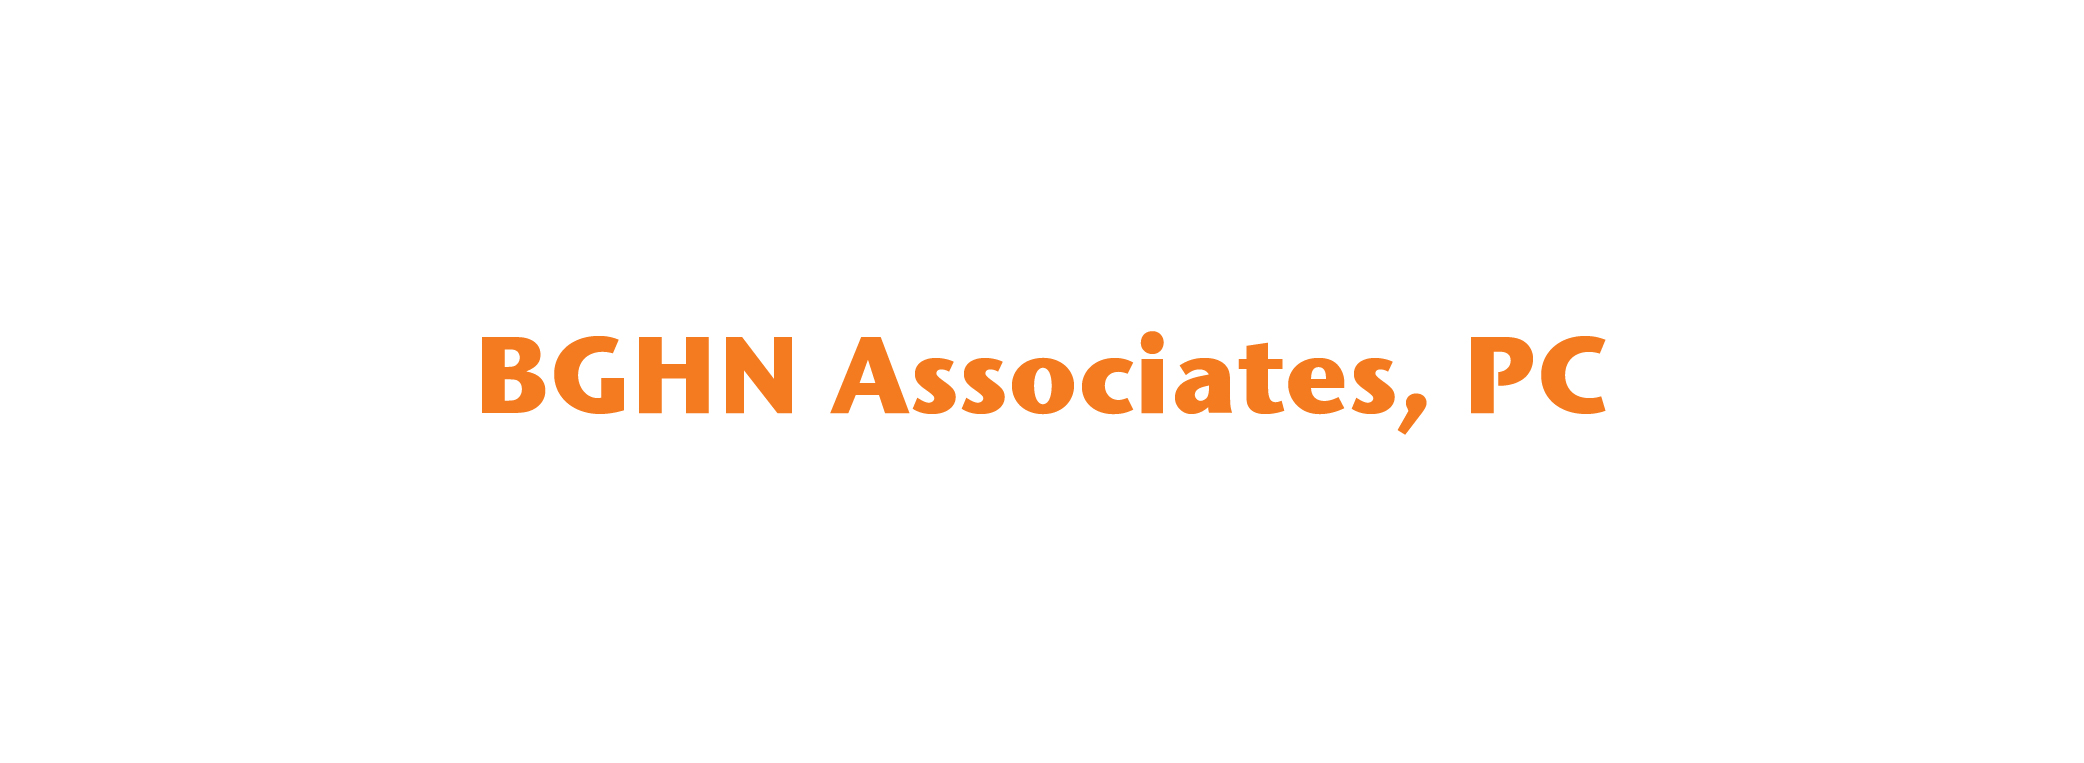 BGHN Associates, PC